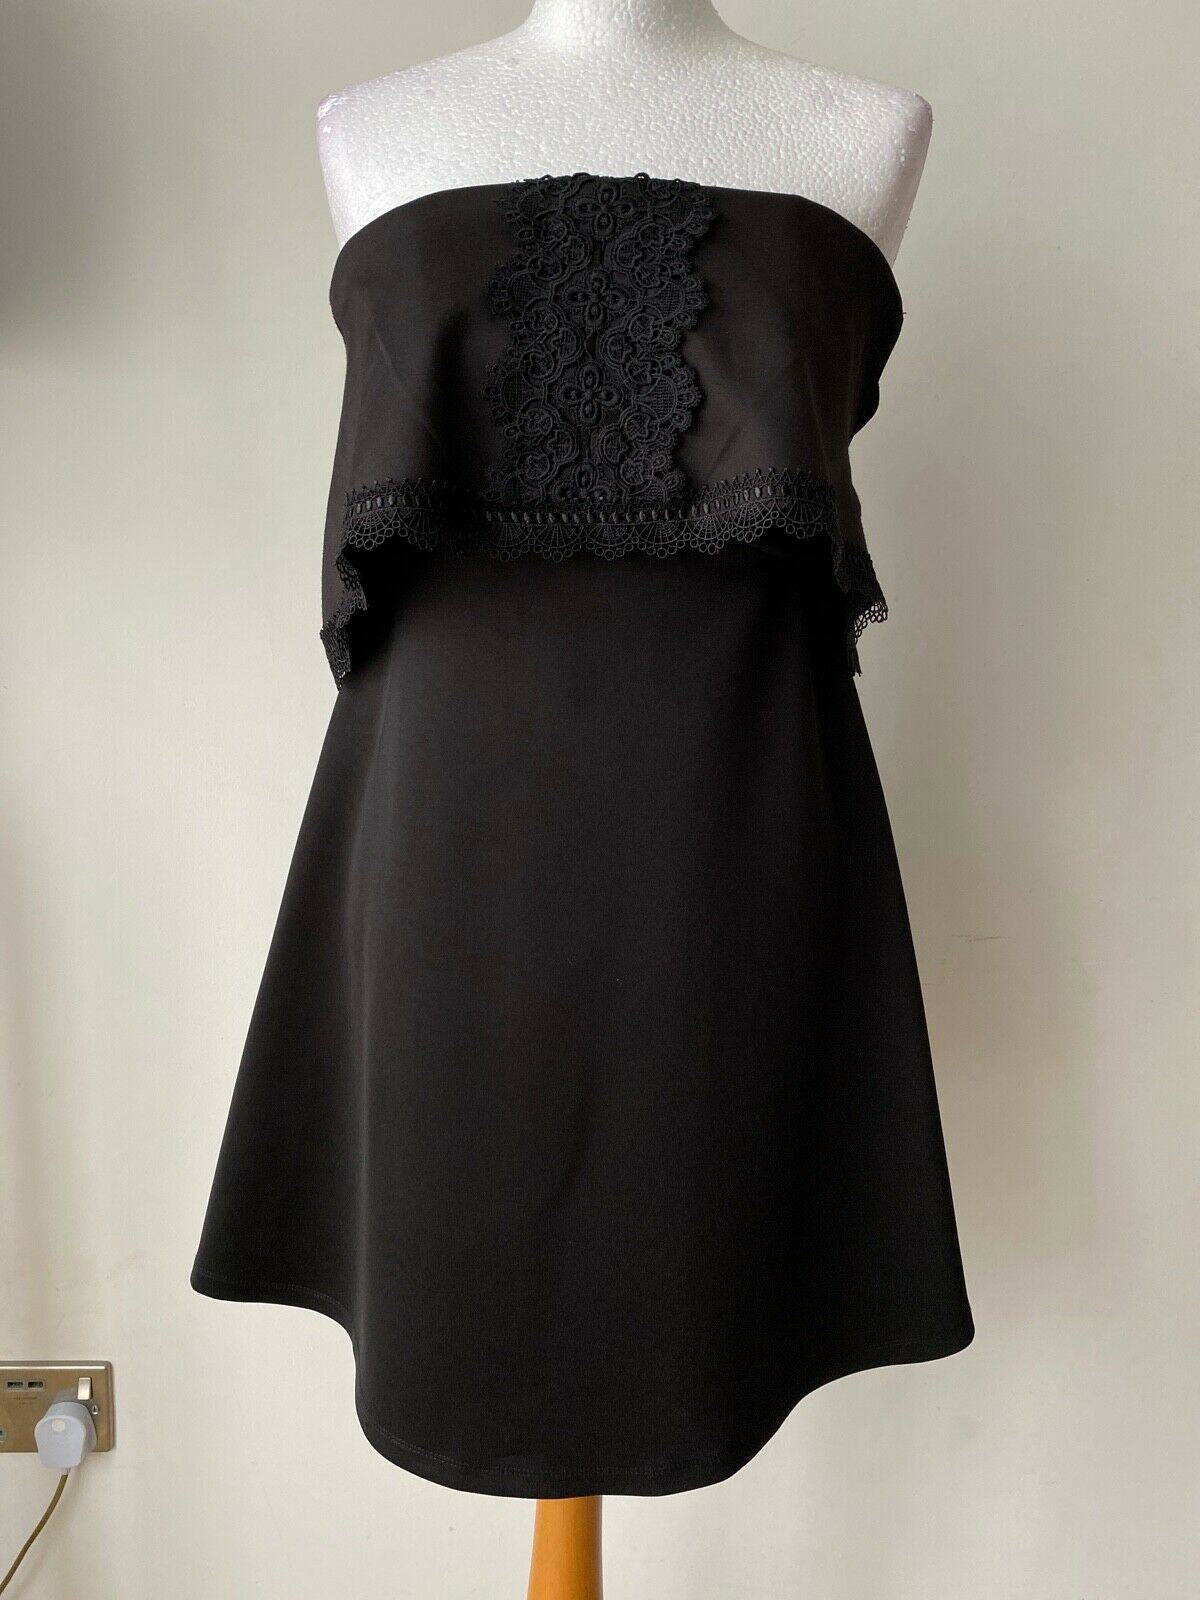 River Island Black Strapless A-Line Dress Size 8 Crochet Detail